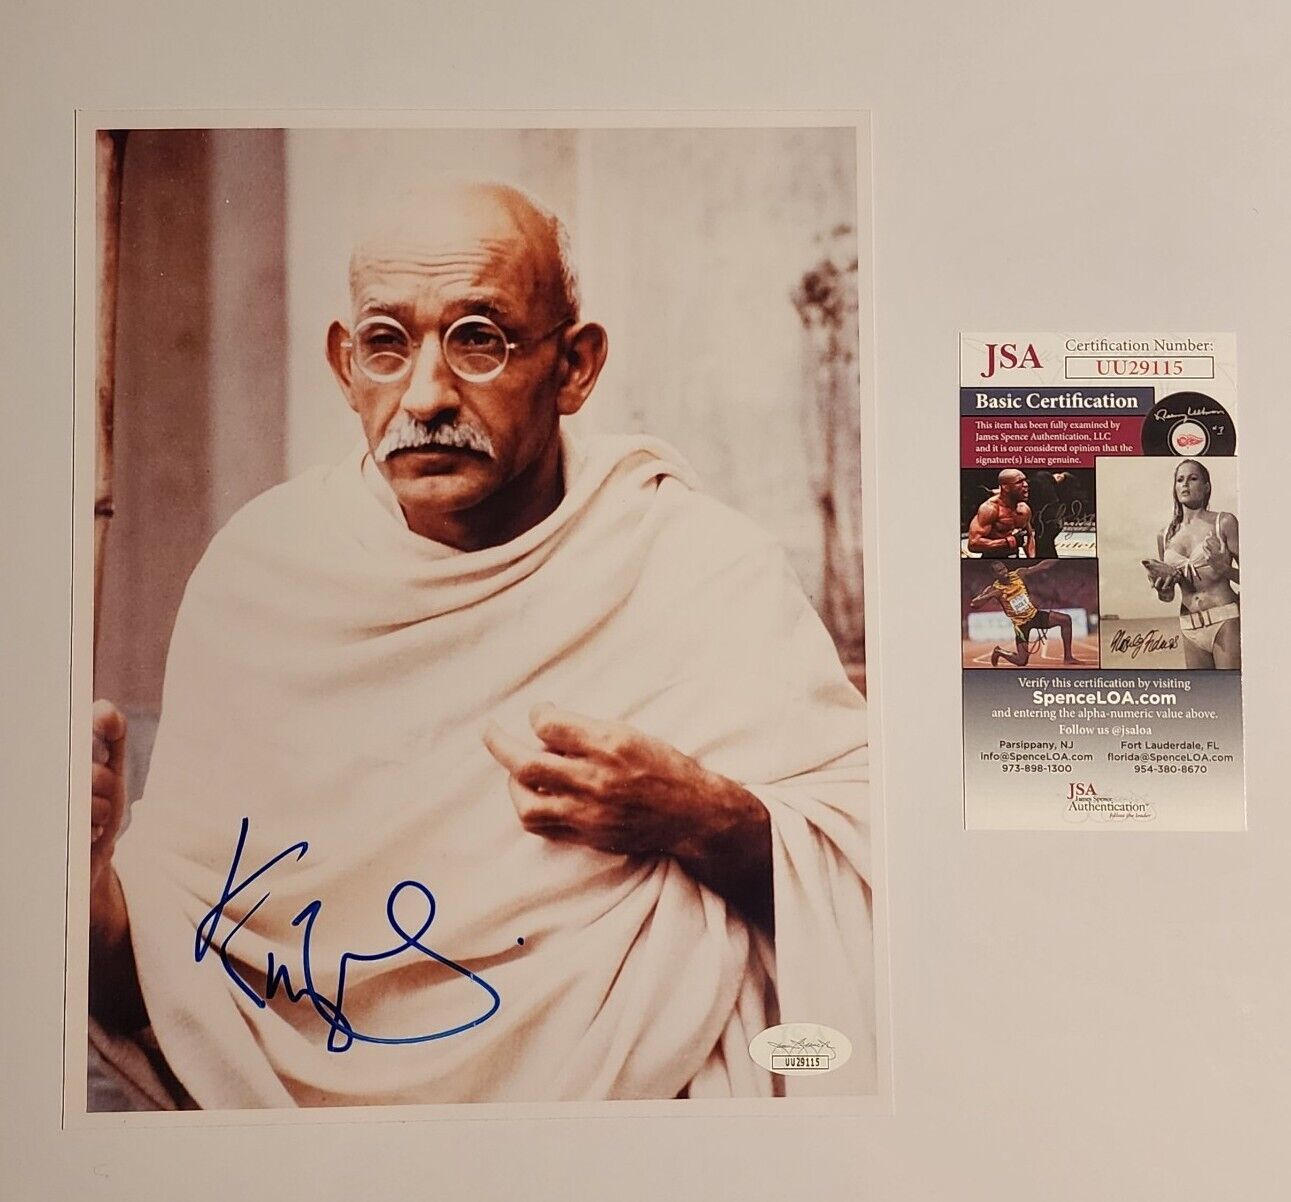 Ben Kingsley Signed Photo JSA COA Gandhi 8x10 Autograph Auto Actor Oscar Winner